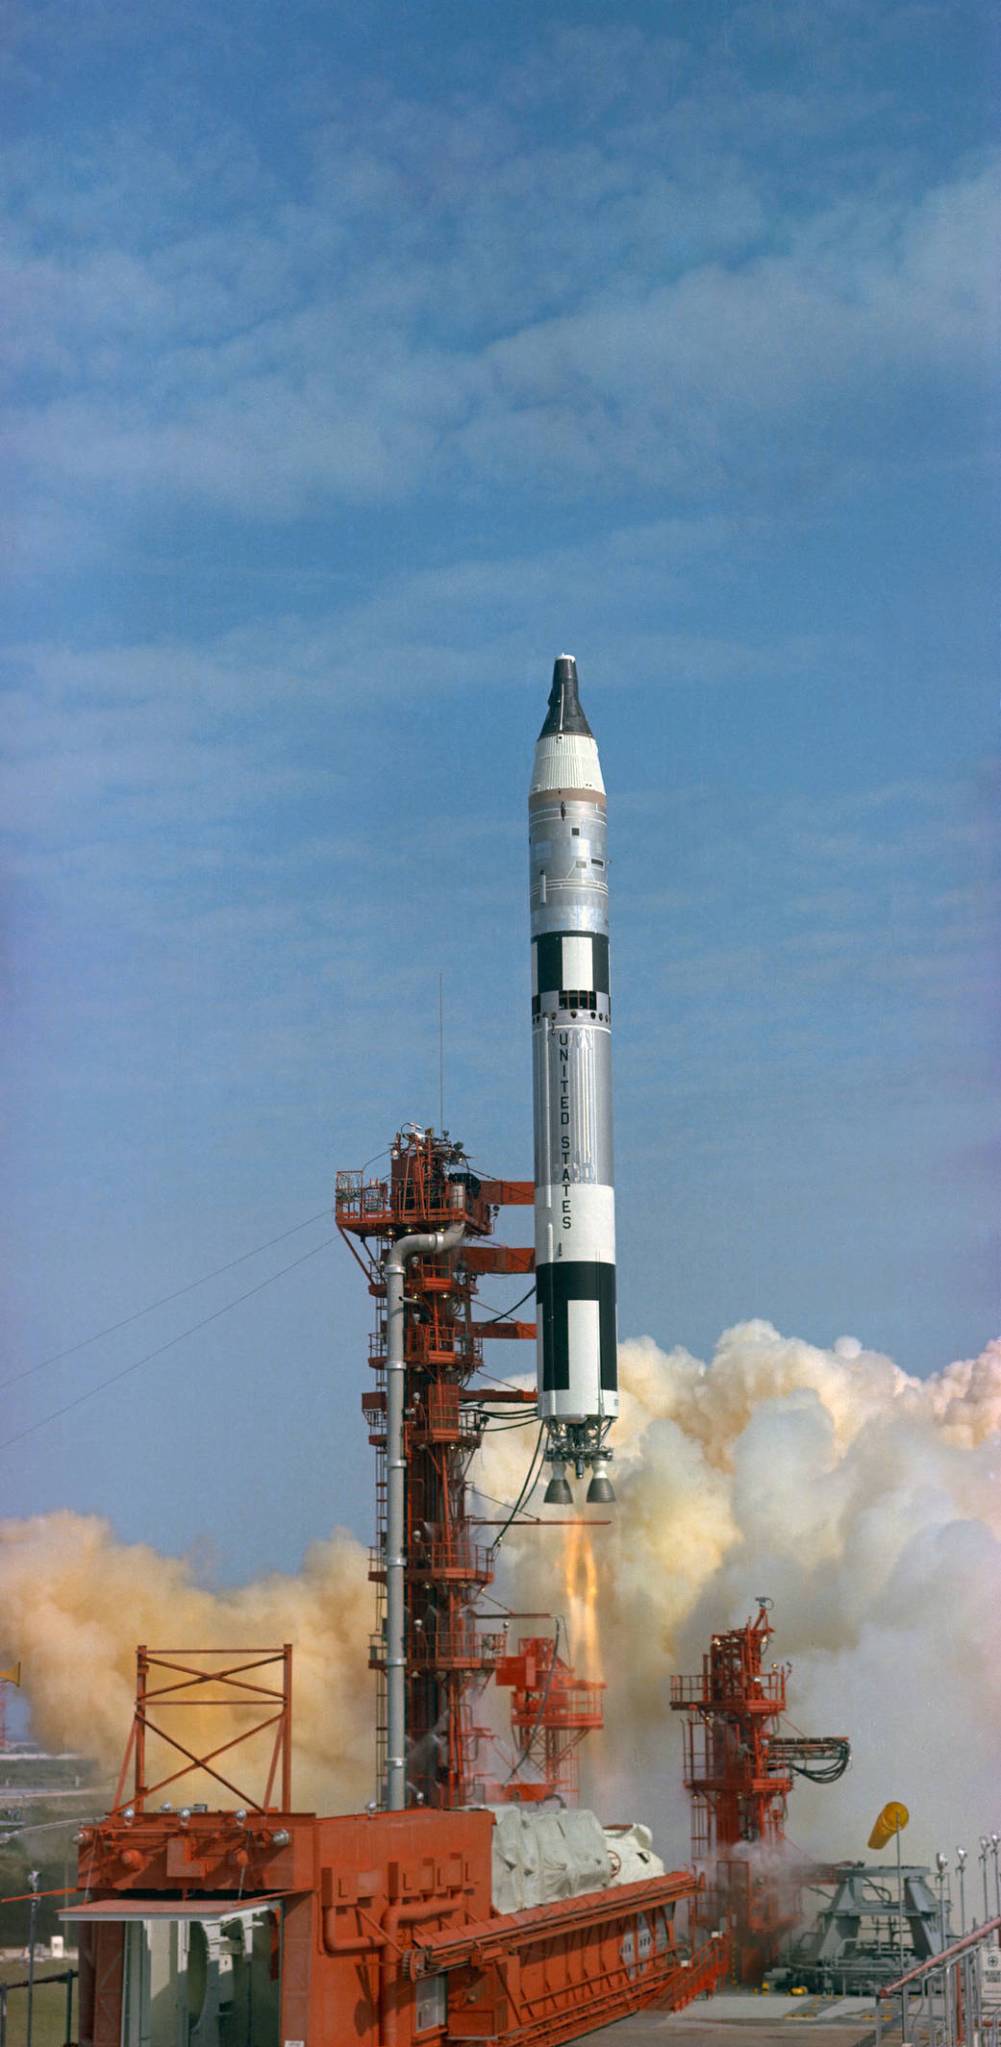 Daytime launch of Gemini-Titan 3, rocket lifting off launch pad with cloud of smoke below